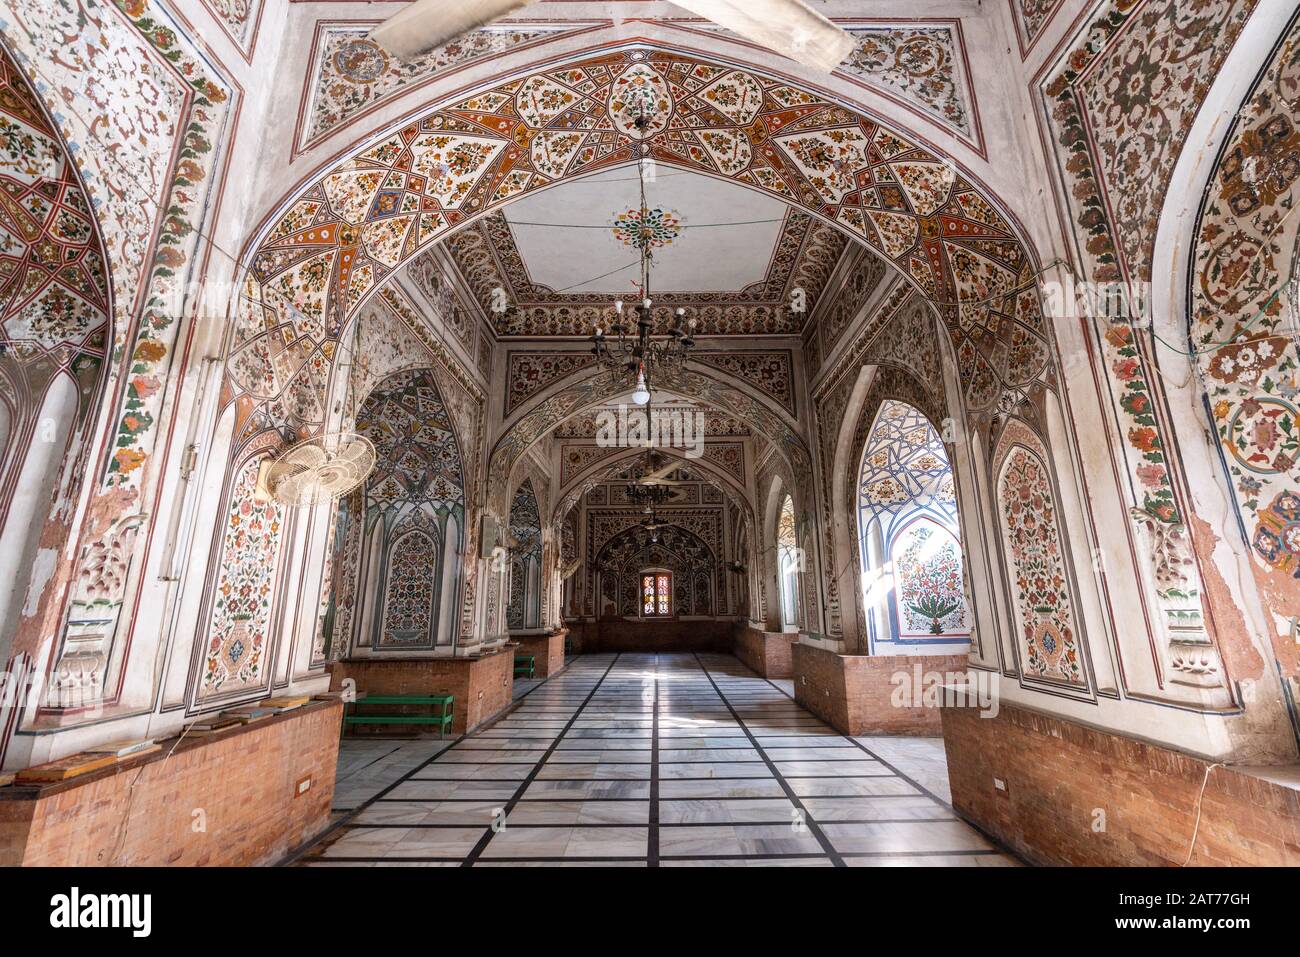 Esempi di arte e architettura islamica nella moschea di Mahabat Khan a Peshawar, Khiber Pakhtunkhwa, Pakistan Foto Stock